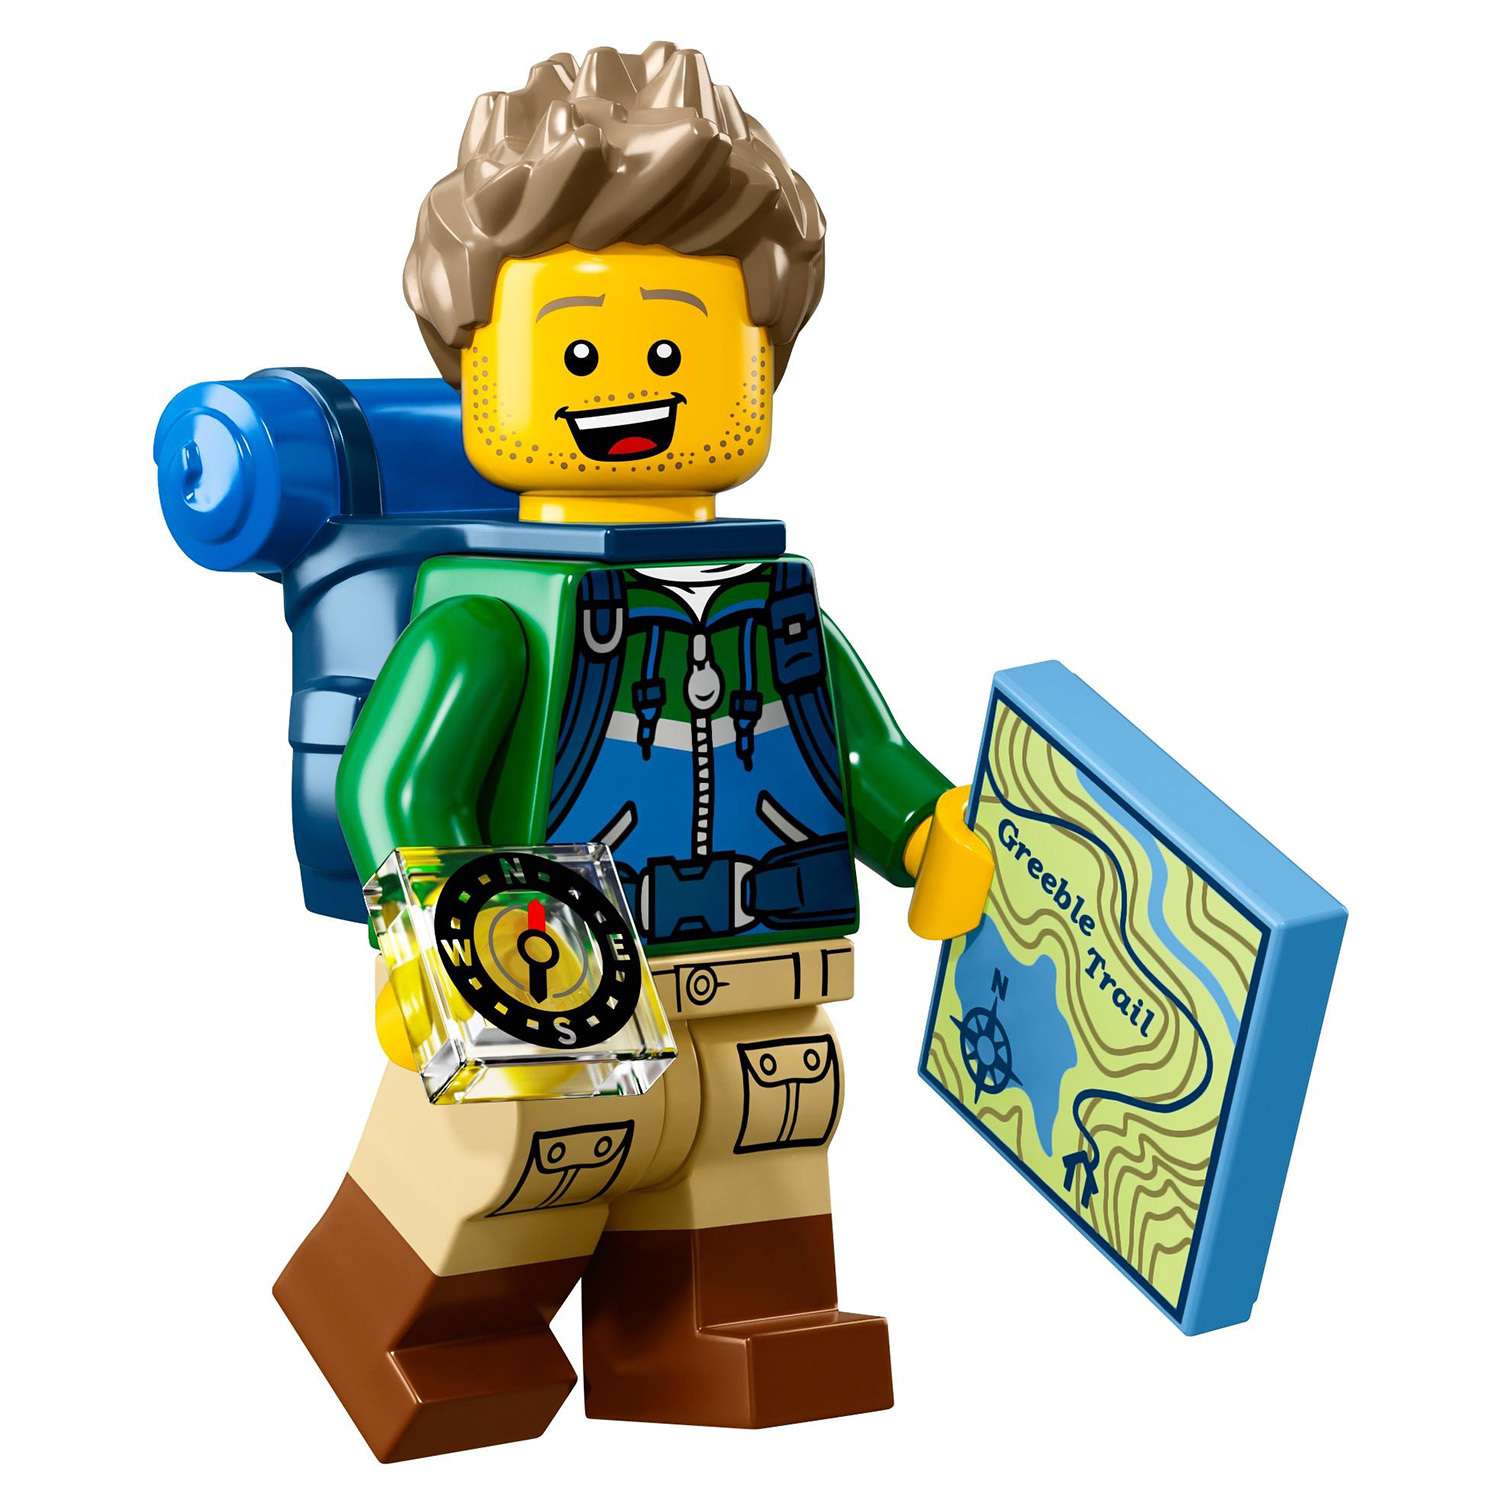 Конструктор LEGO Minifigures Confidential Minifigures Sept. 2016 (71013) - фото 21